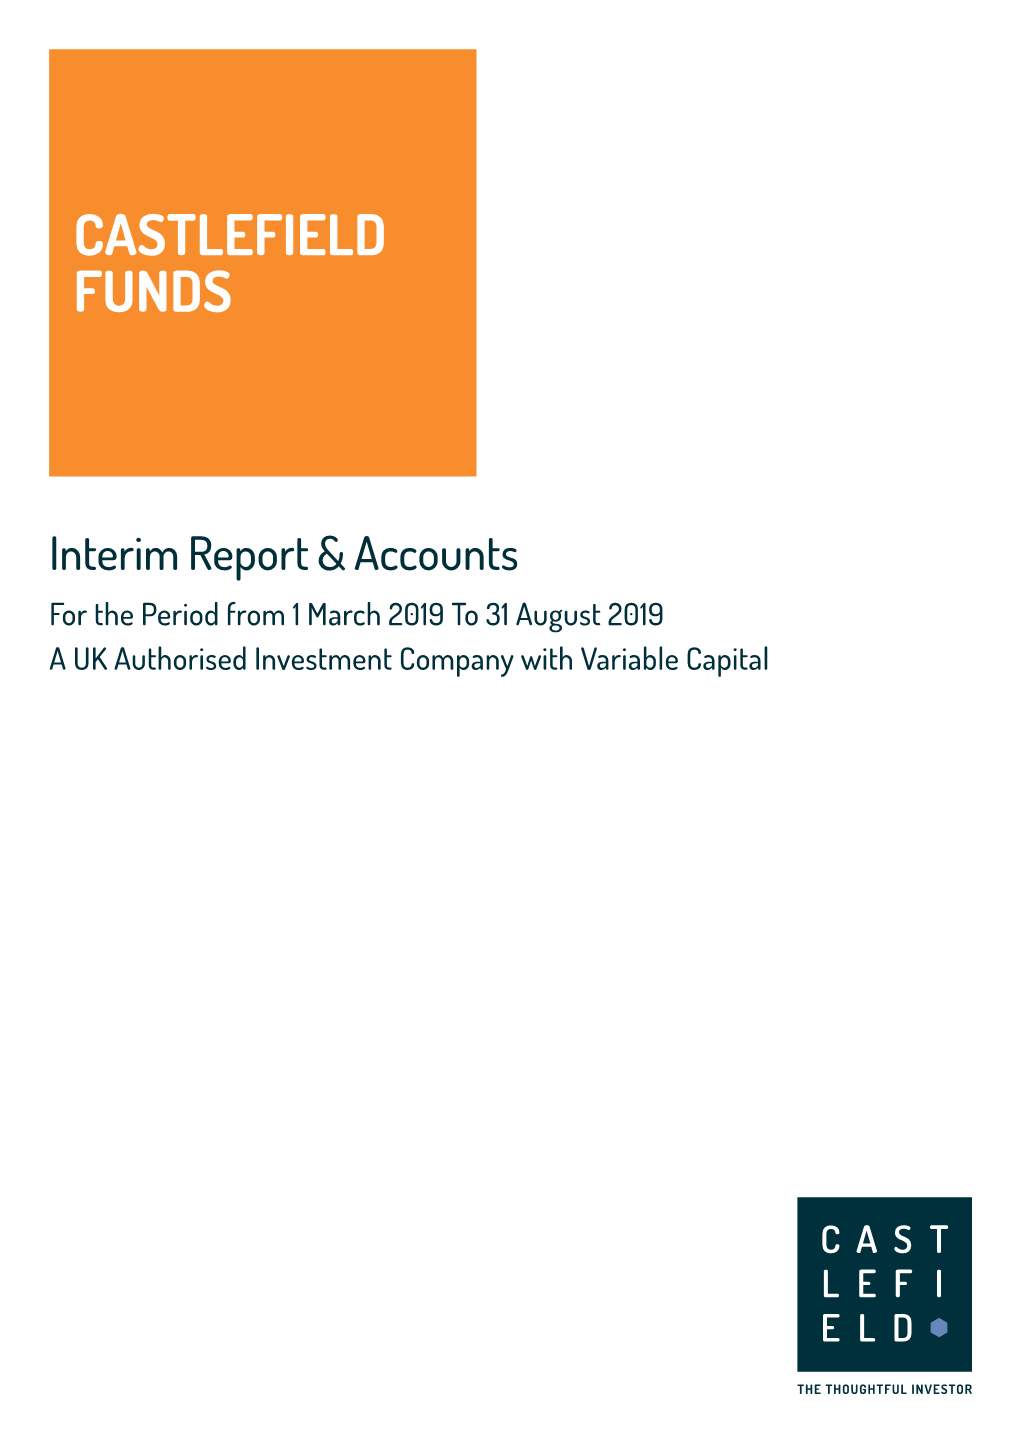 Castlefield Funds